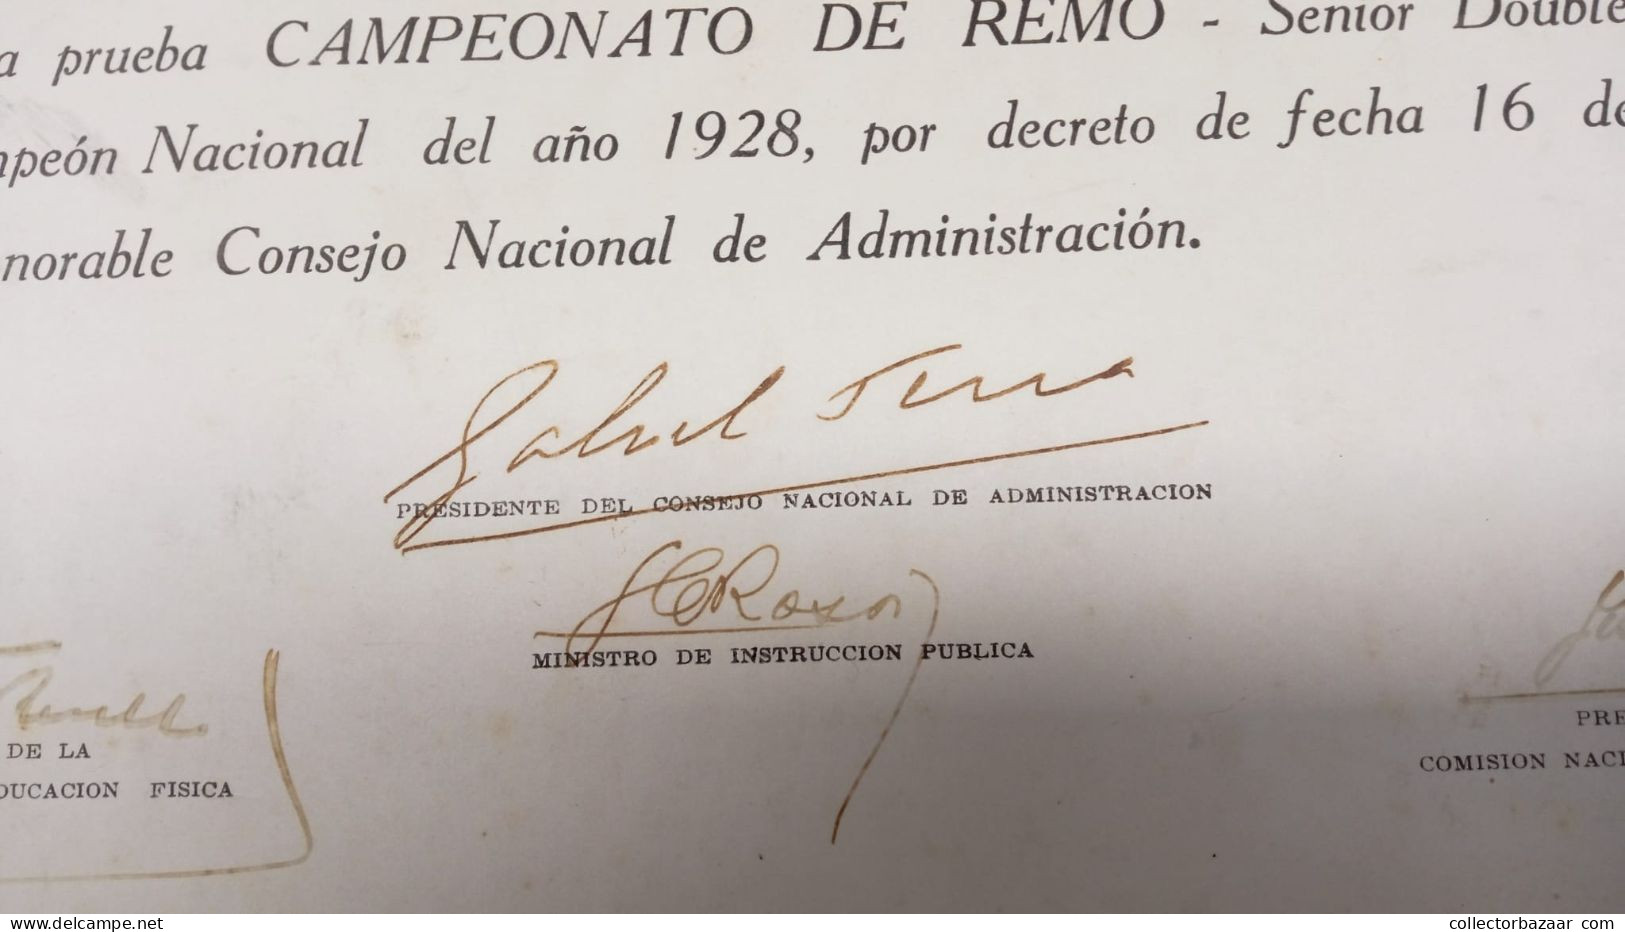 1926 - 1930 Uruguay National Rowing Champion 4 Diplomas With President Of Republic Autographs Brum Terra Serrato Nice - Remo